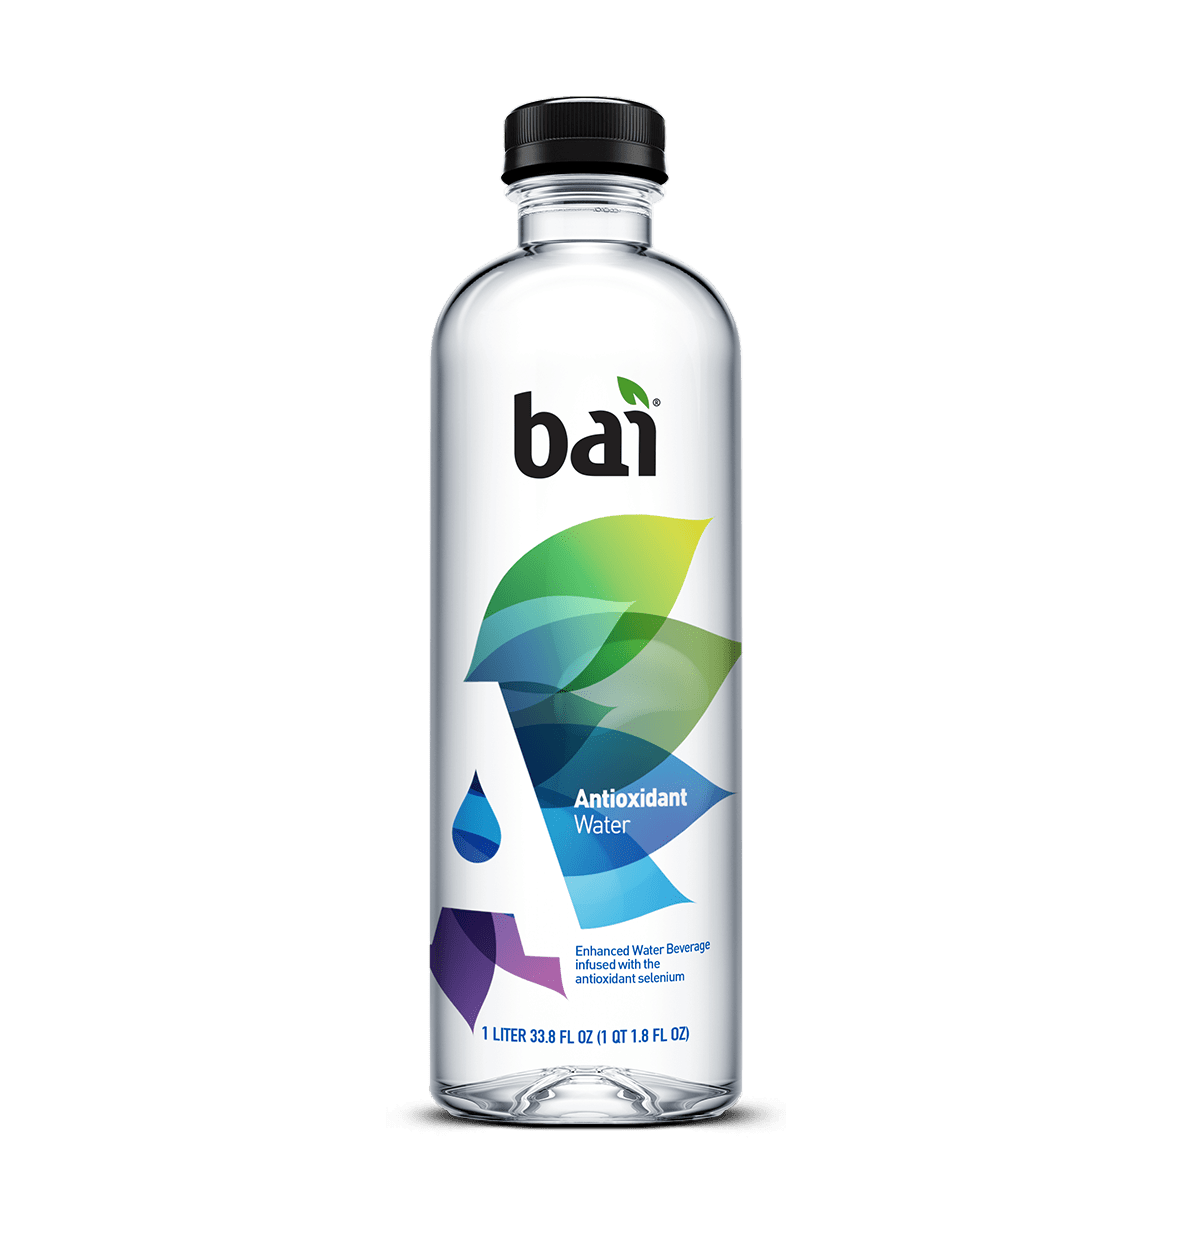 Bai antioxidant water 12ct 1ltr